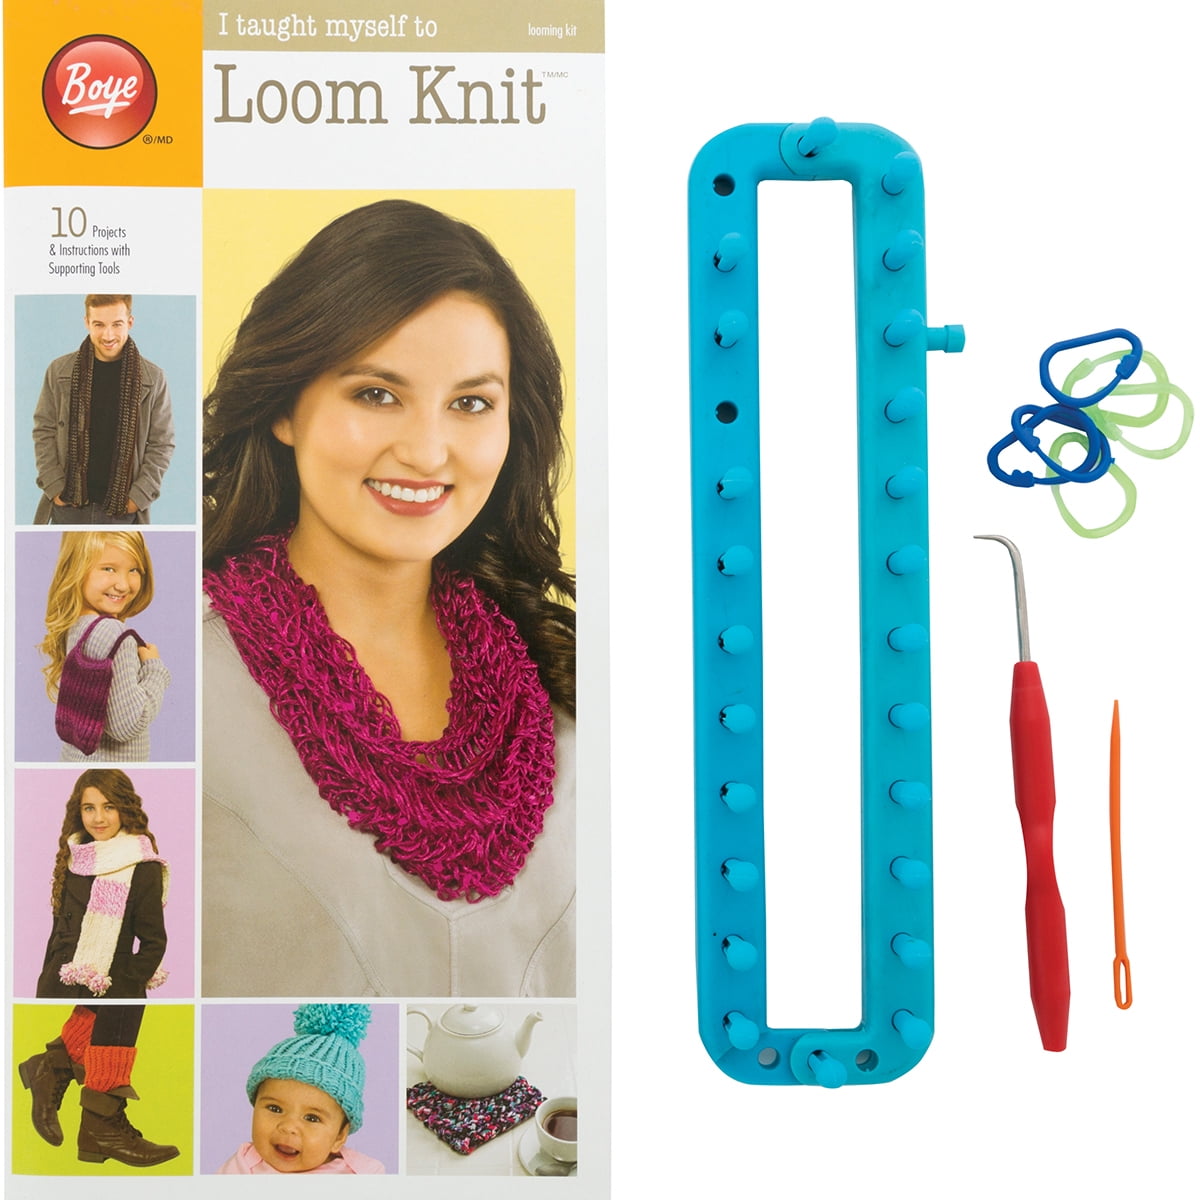 Crochet Kit for Beginners, 105PCS Crochet Starter Kit with 18 Colors  Crochet Yarn, Double-Layer Crochet Set Beginner Crochet Kit for Kids/Adults,  Professional Storage Bag 